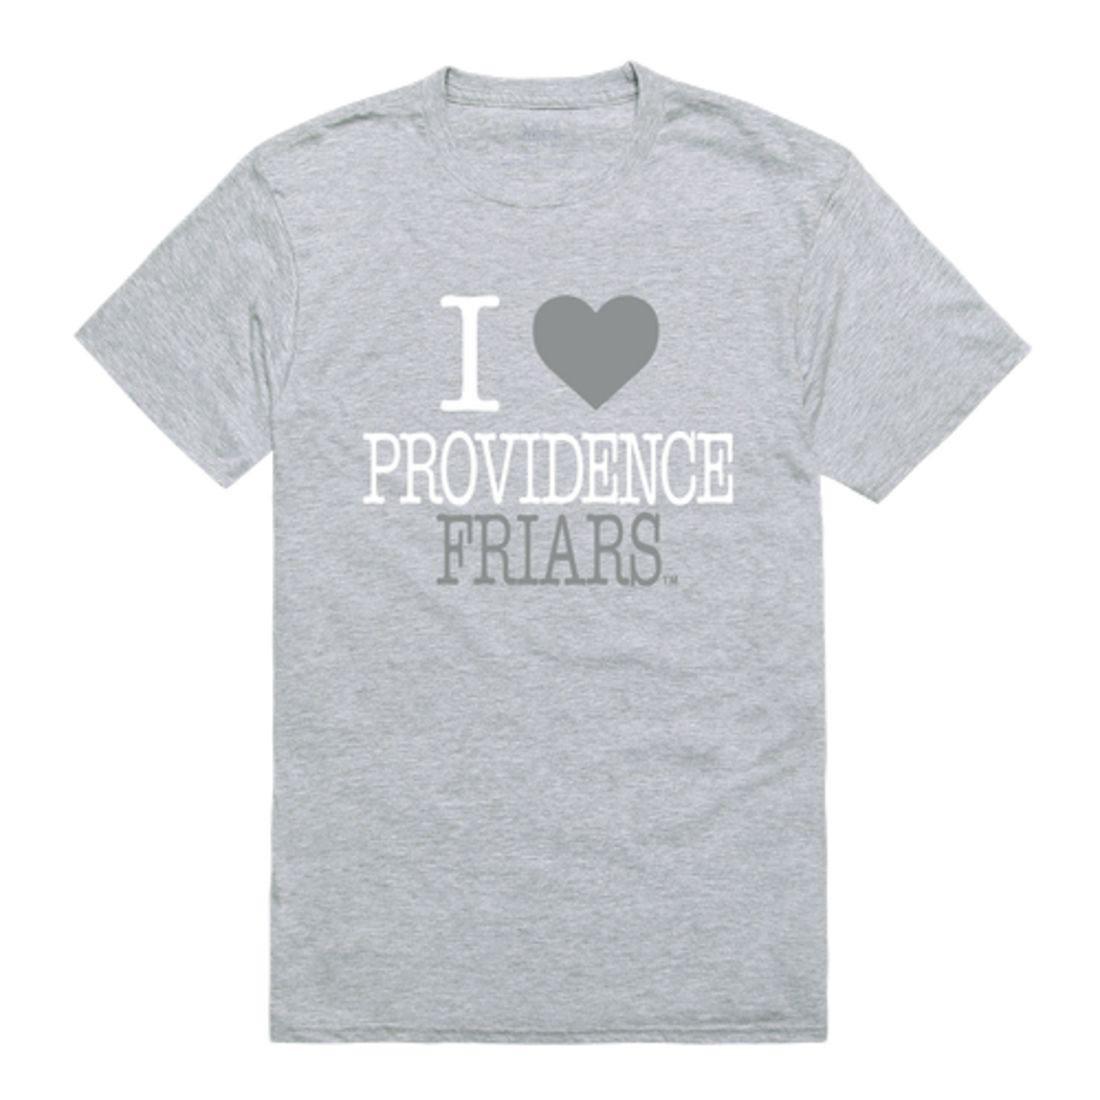 I Love Providence College Friars T-Shirt-Campus-Wardrobe